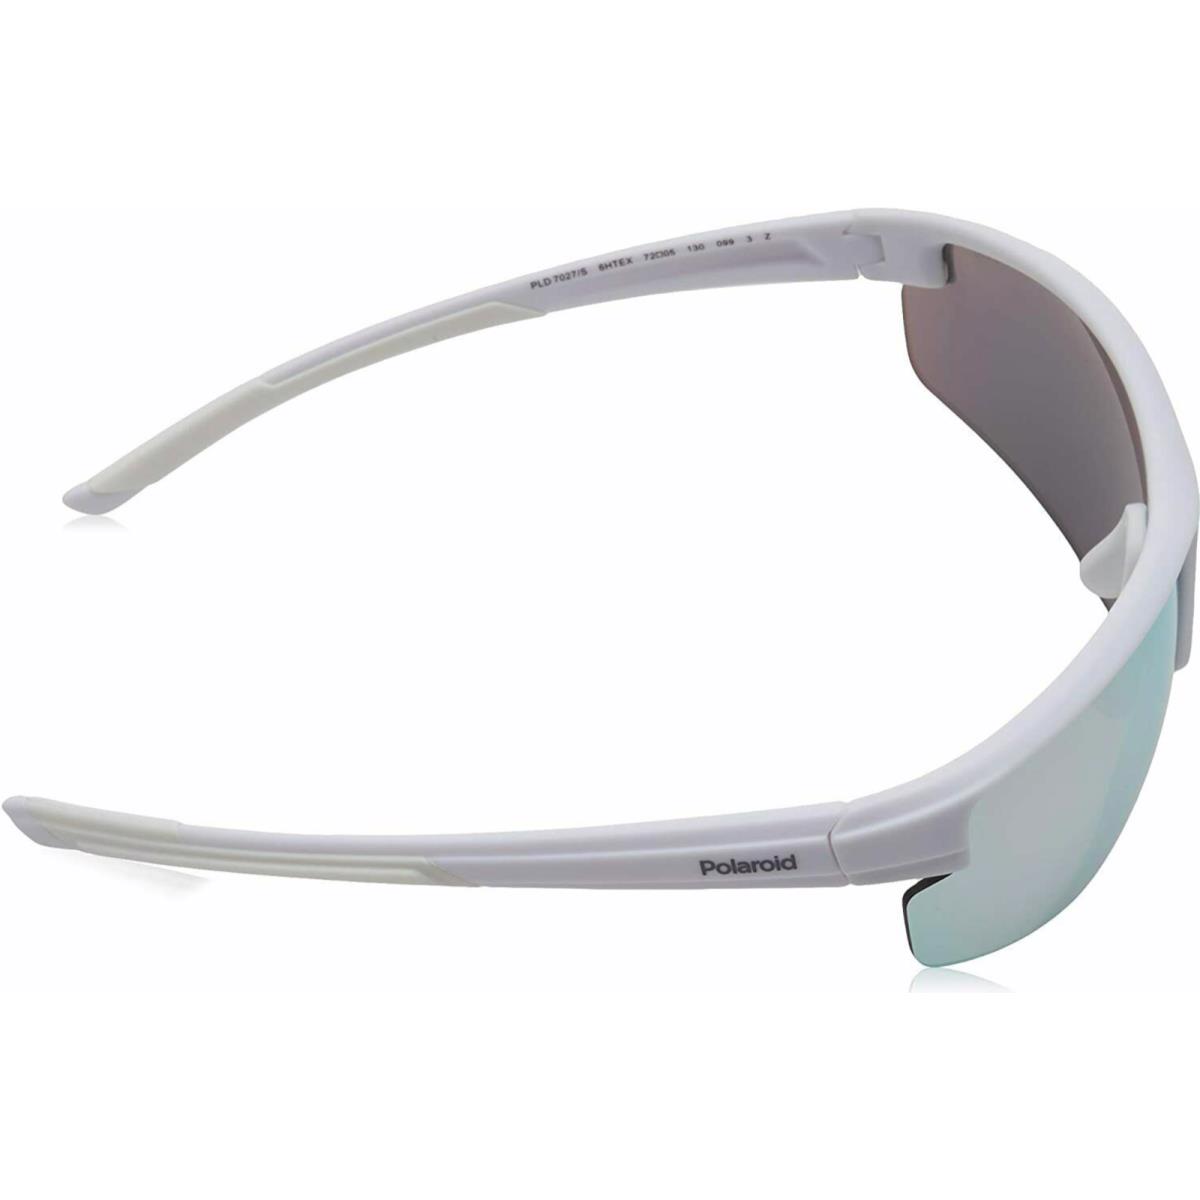 Polaroid sunglasses PDL - Matte White Frame, Grey with Silver Mirror Lens